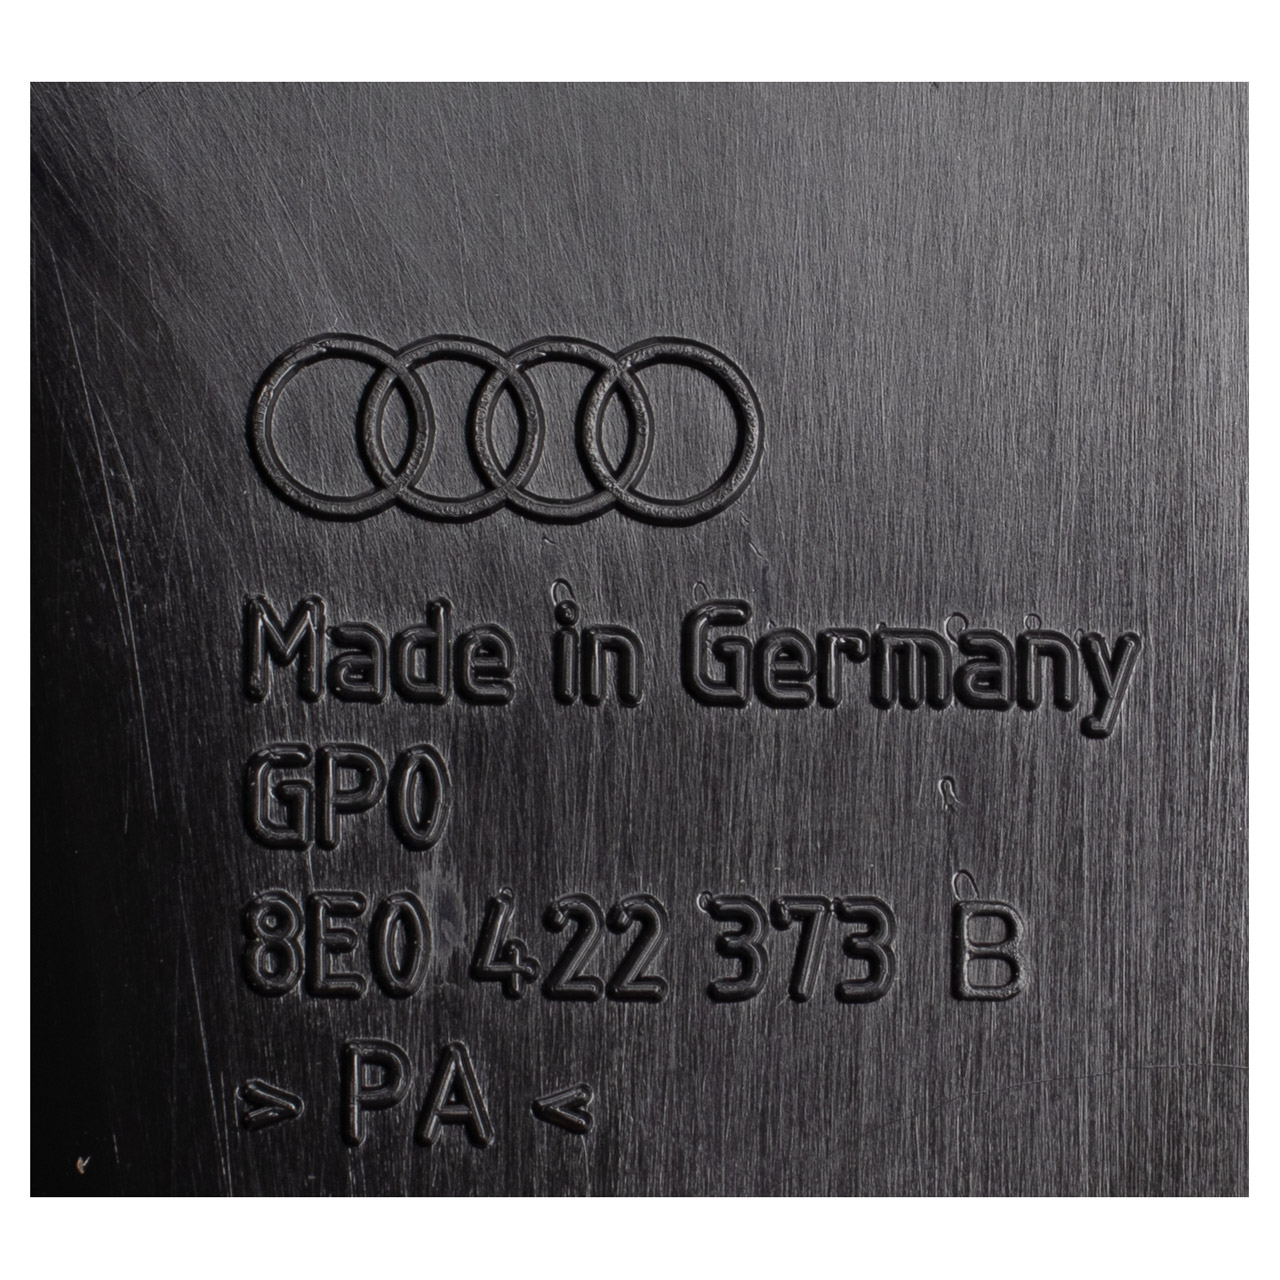 ORIGINAL Audi Seat Ausgleichsbehälter Servolenkung A4 B6 B7 Exeo 8E0422371B